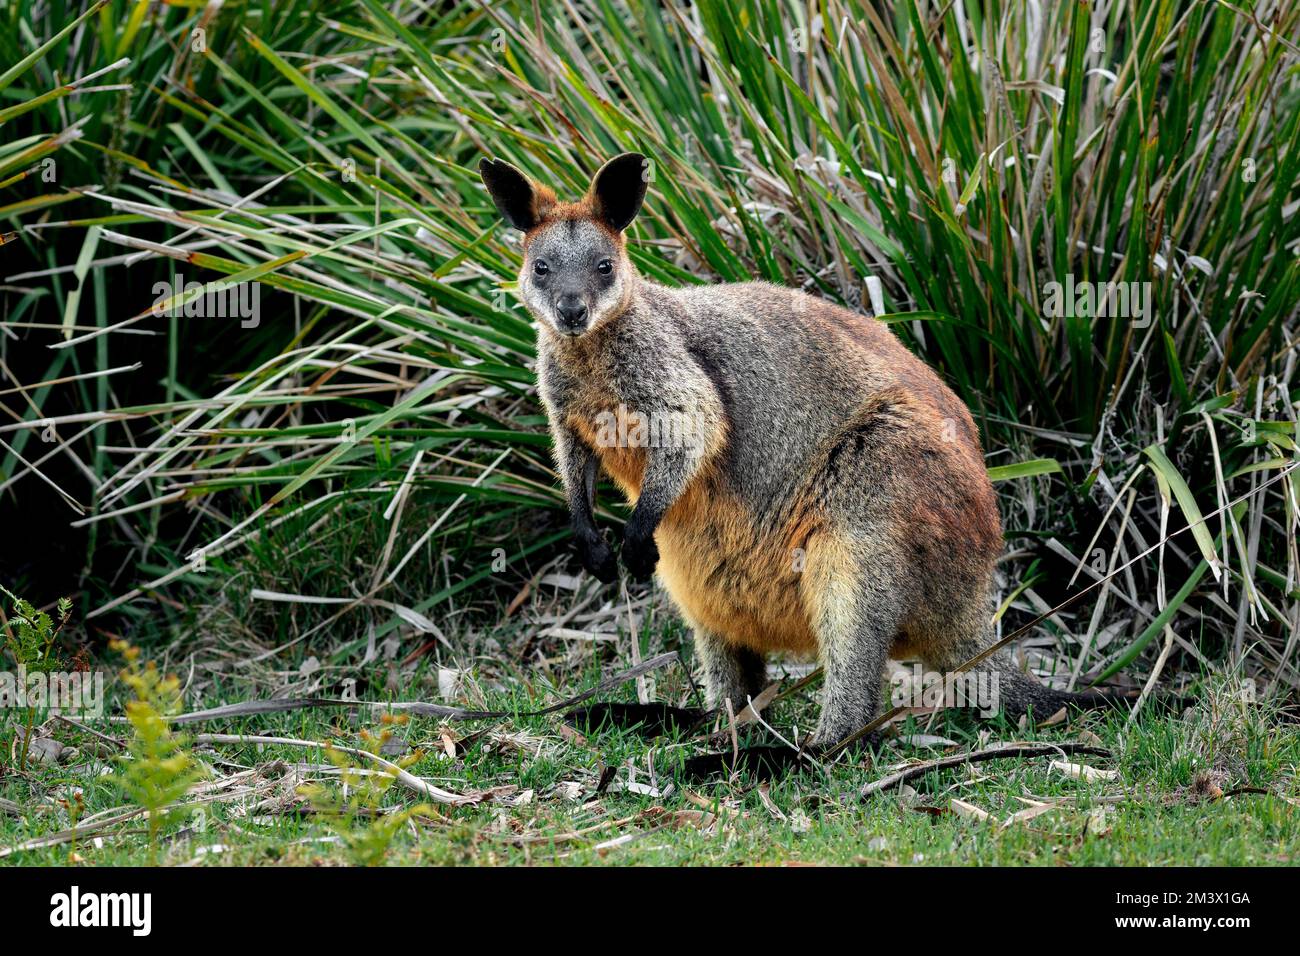 Swamp Wallaby in its natural environment. Stock Photo